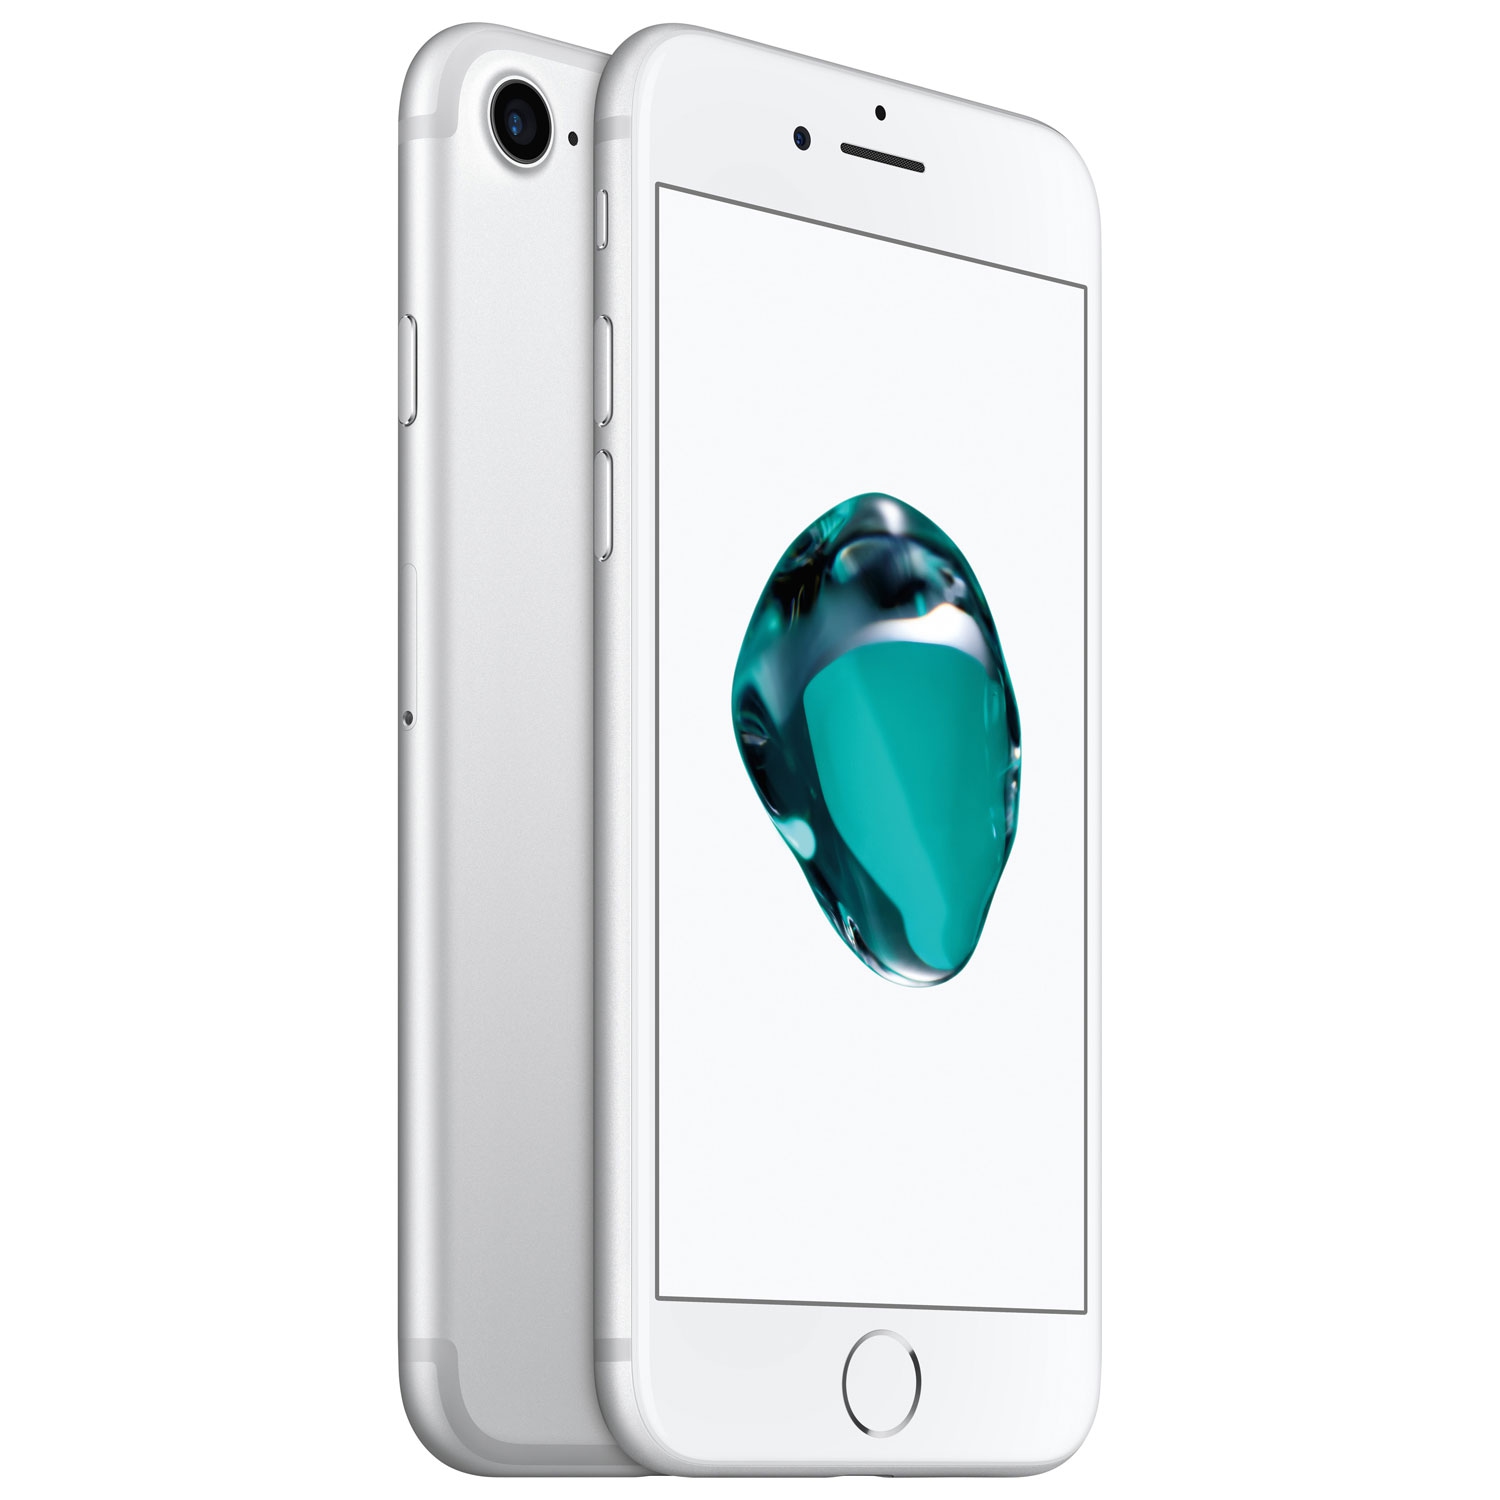 Refurbished (Good) - Apple iPhone 7 32GB Smartphone - Silver - Unlocked